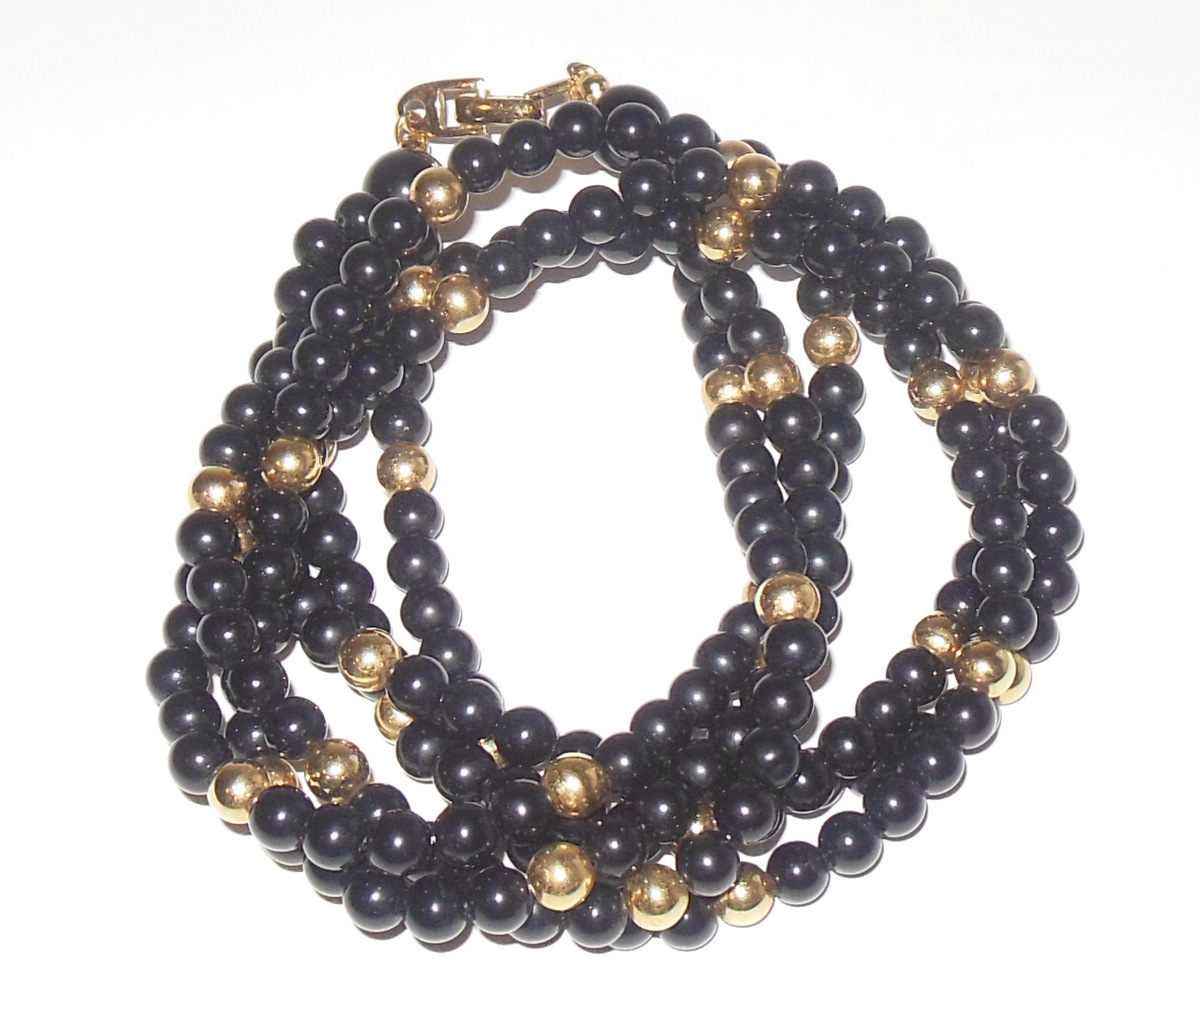 Vintage Napier Twisted Rope Nekclace Black Gold Round Beads Costume Jewelry - $12.95